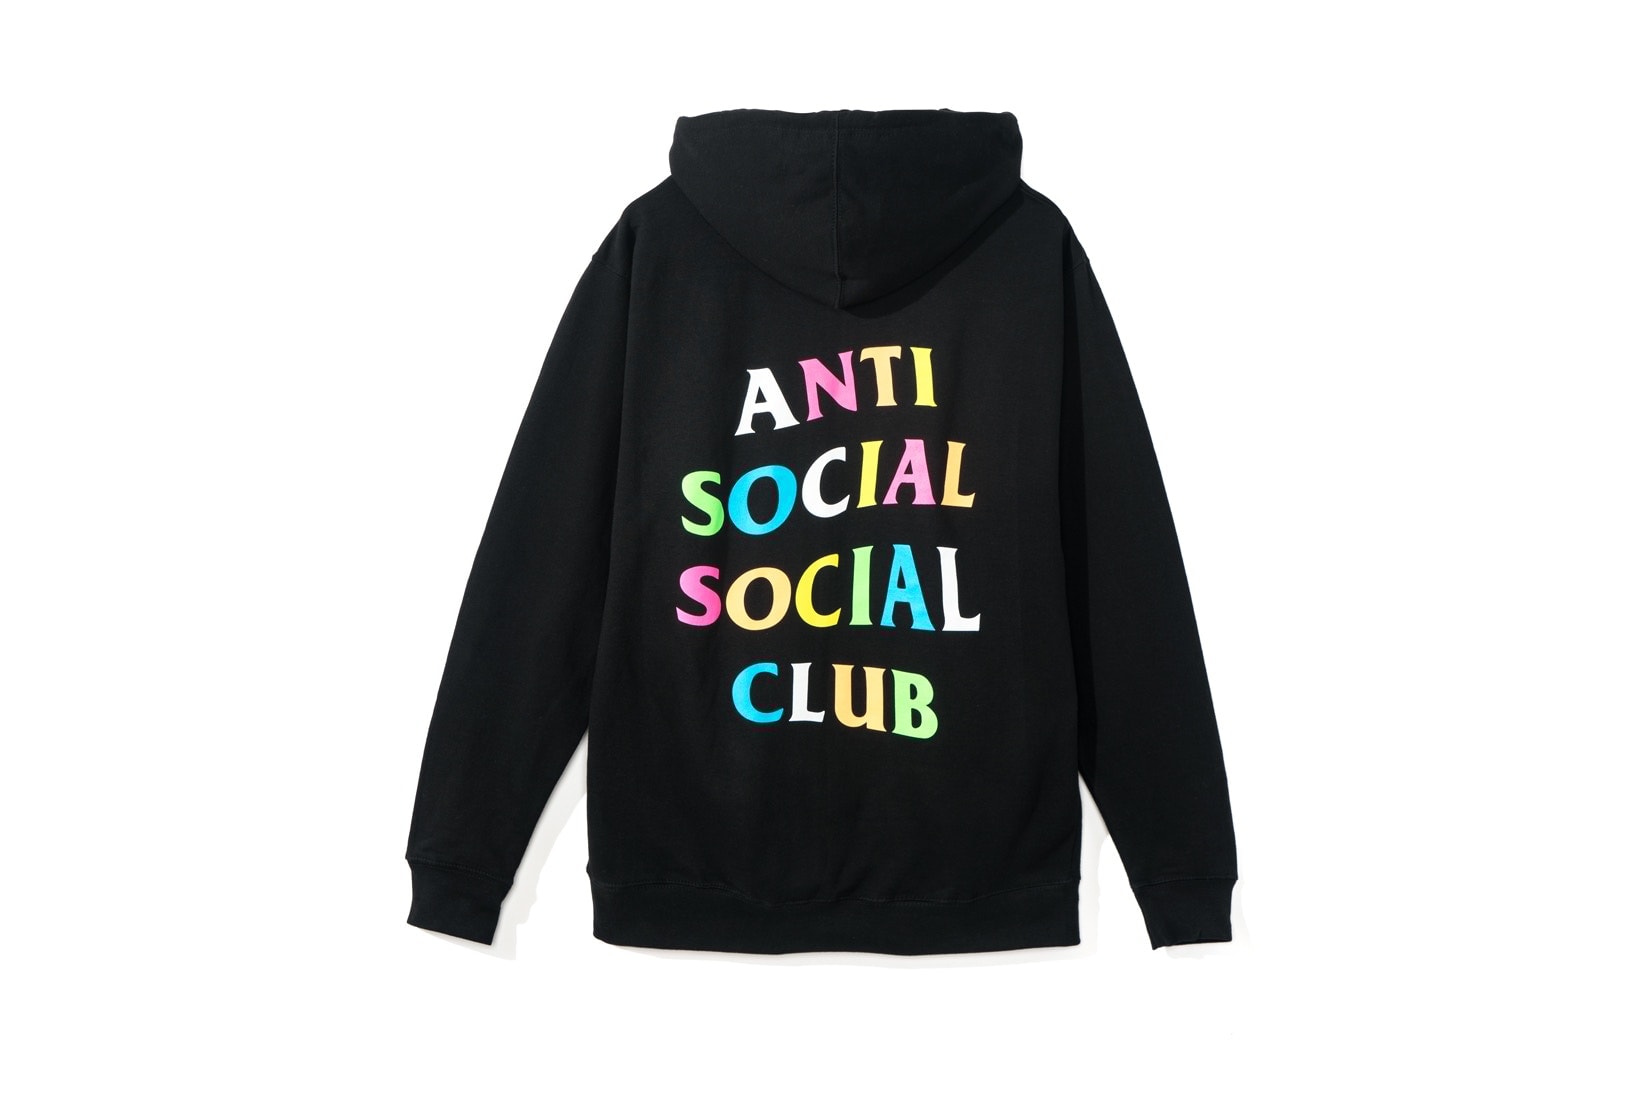 Frenzy x Anti Social Social Club Collaboration